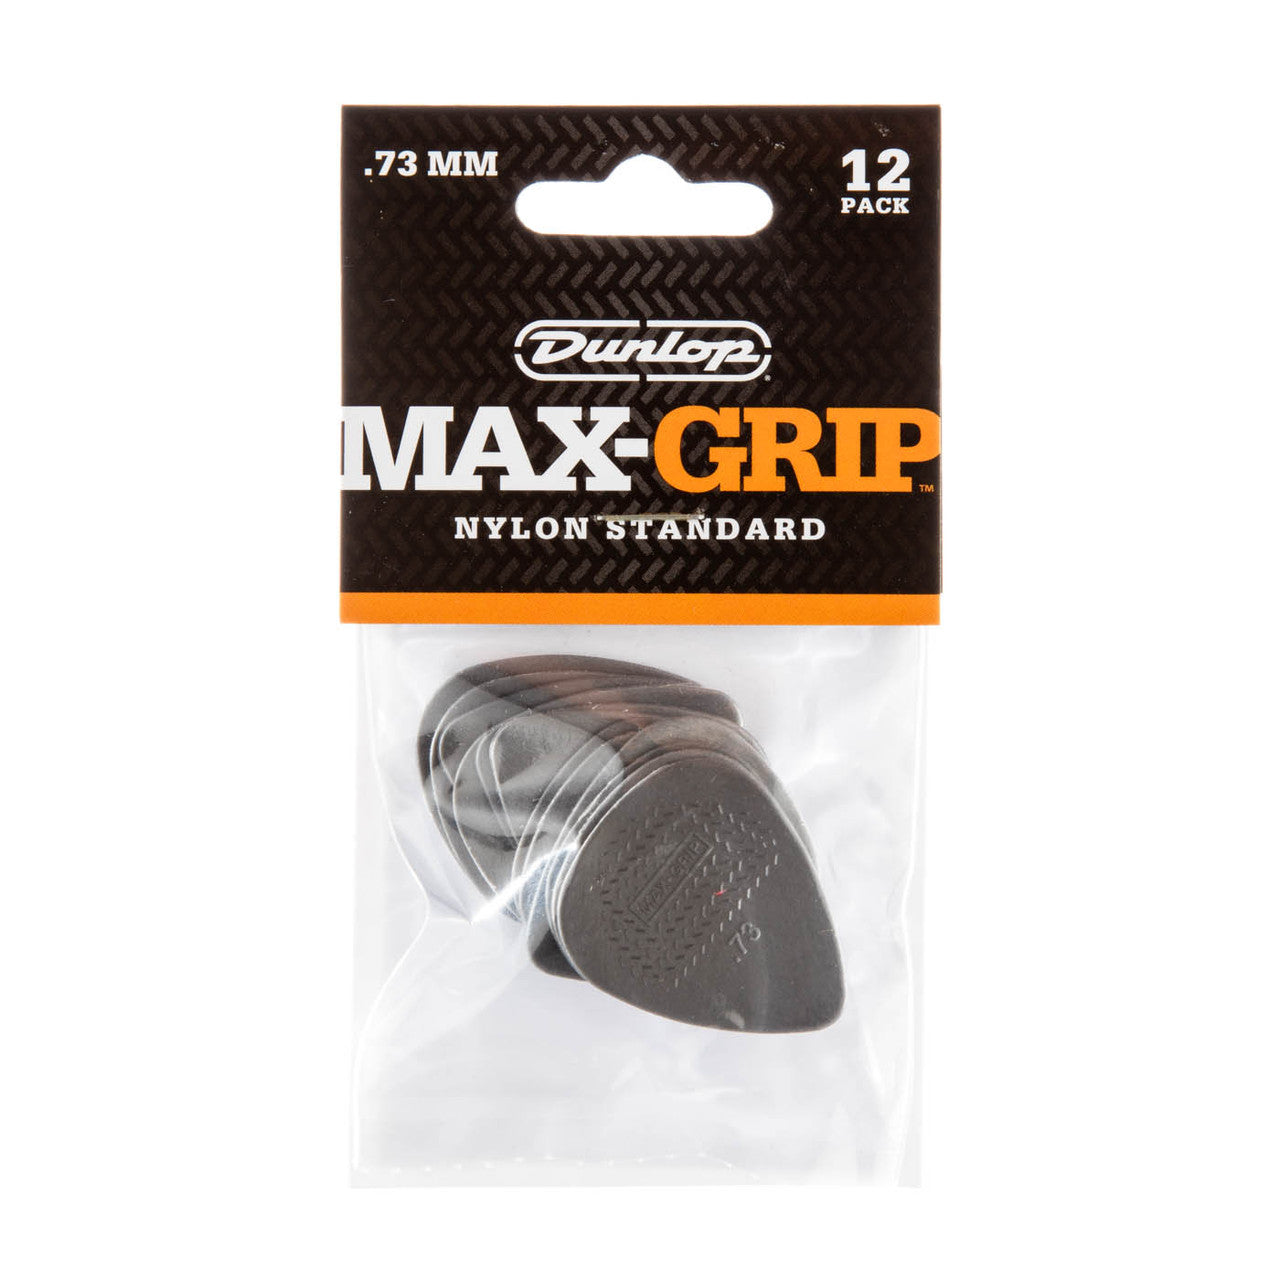 Dunlop Max Grip nylon standard 12-pack ,73mm